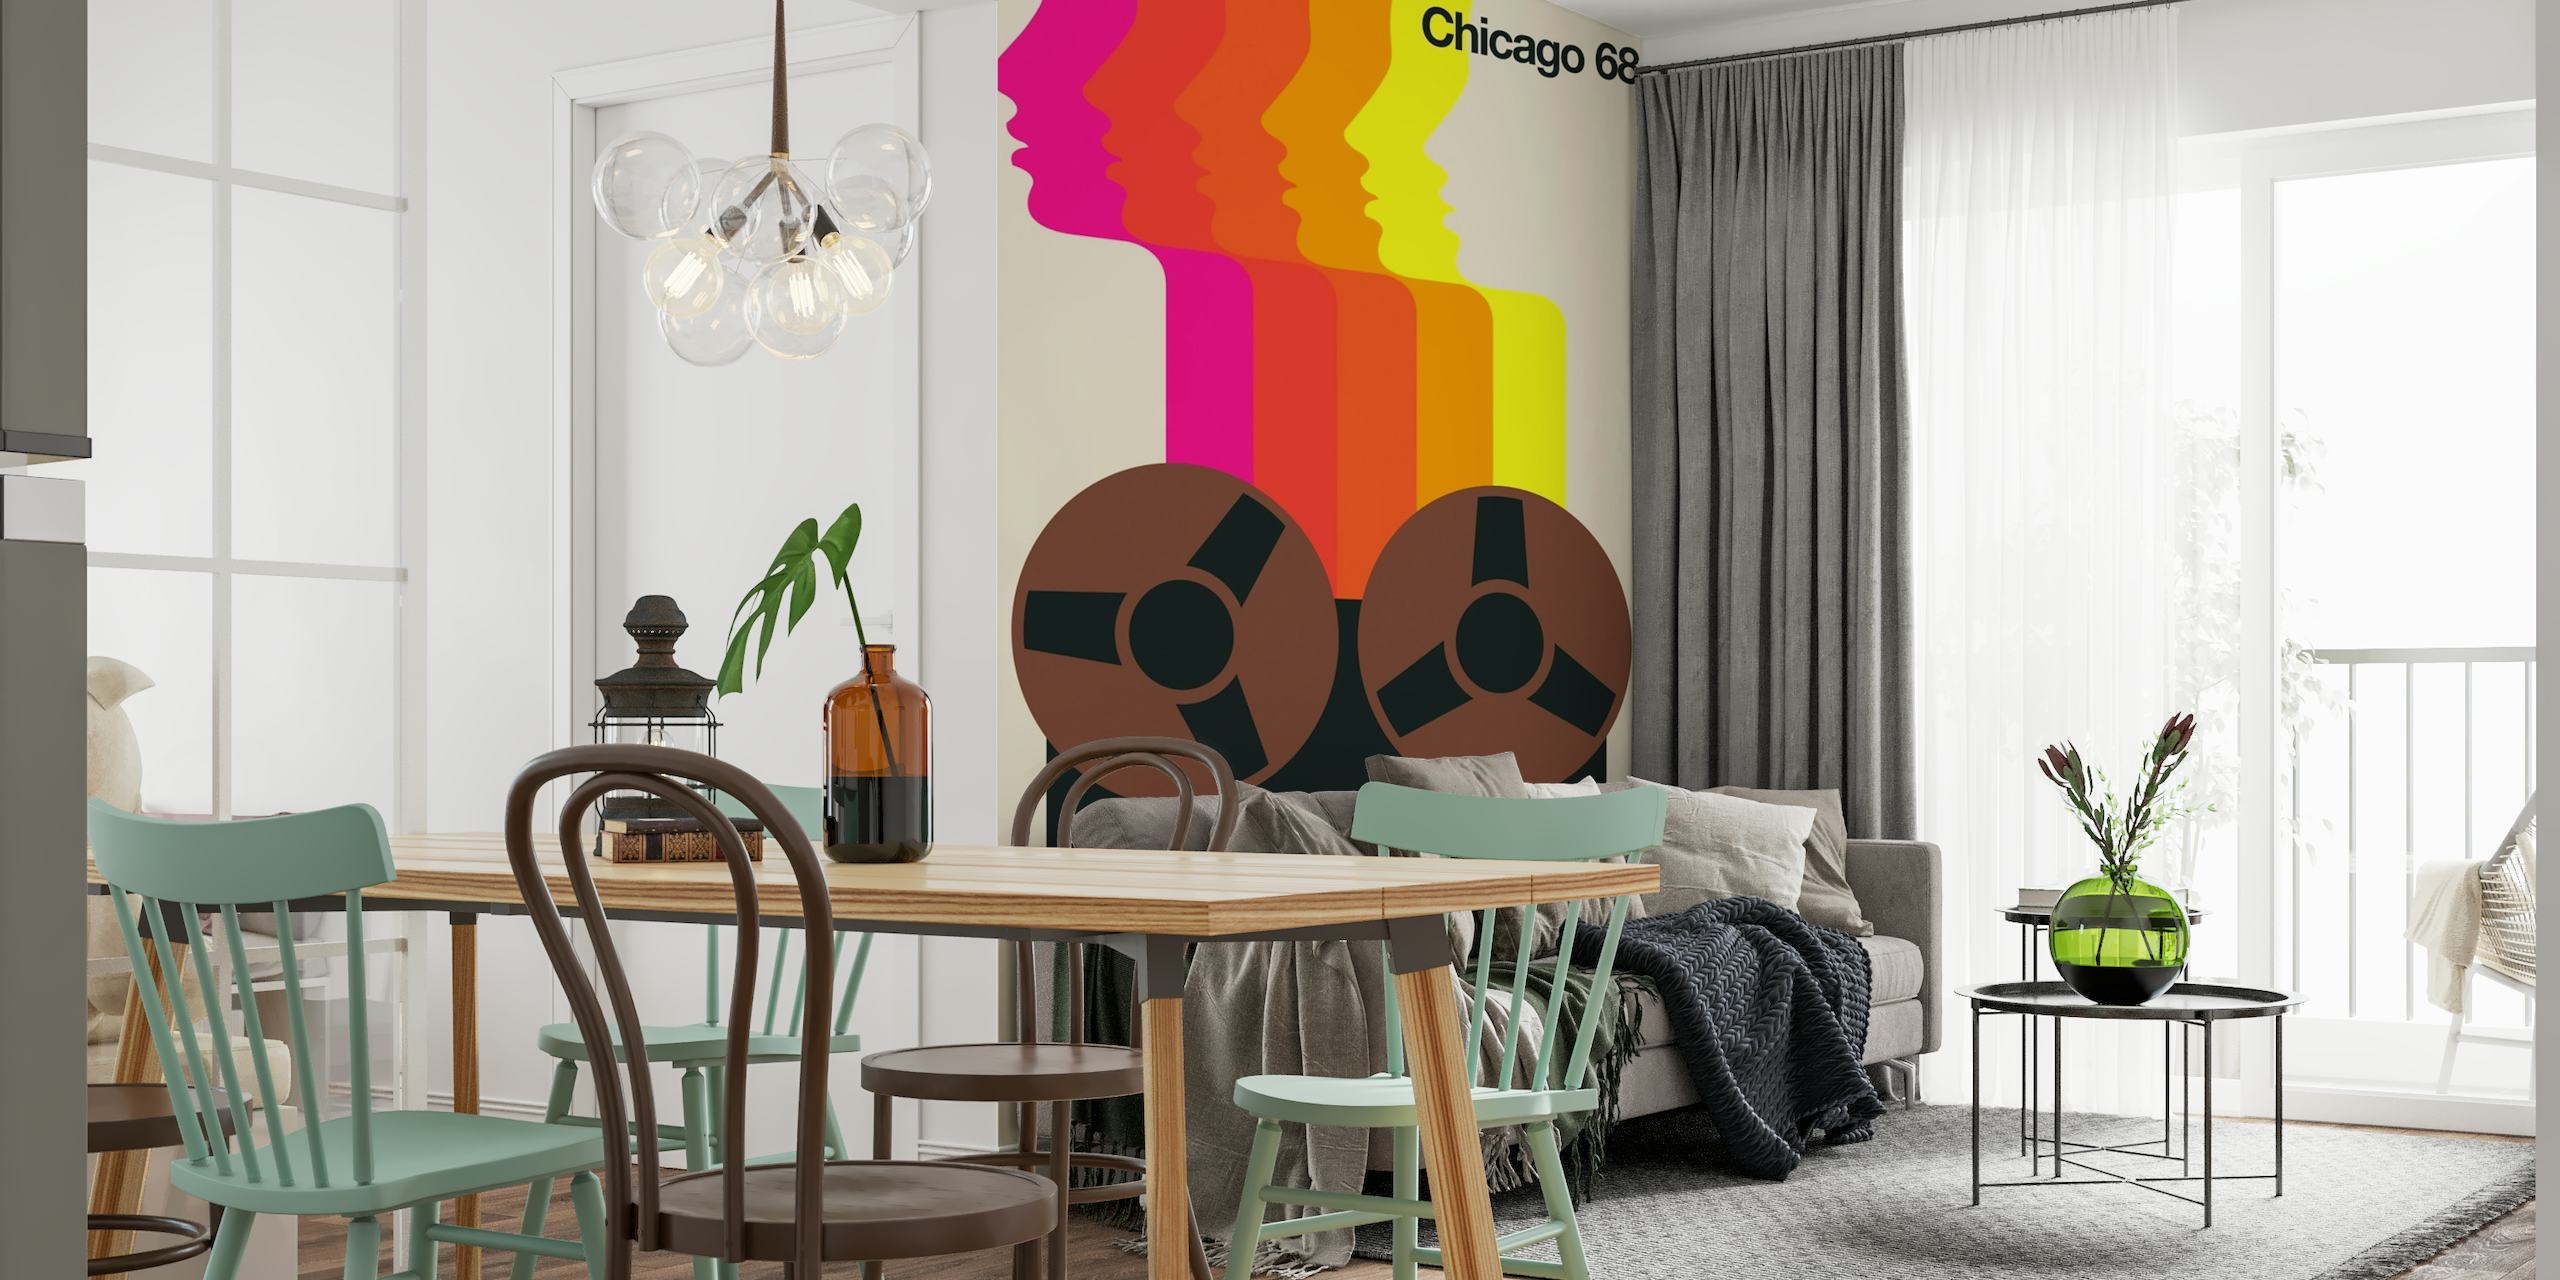 Chicago 68 wallpaper